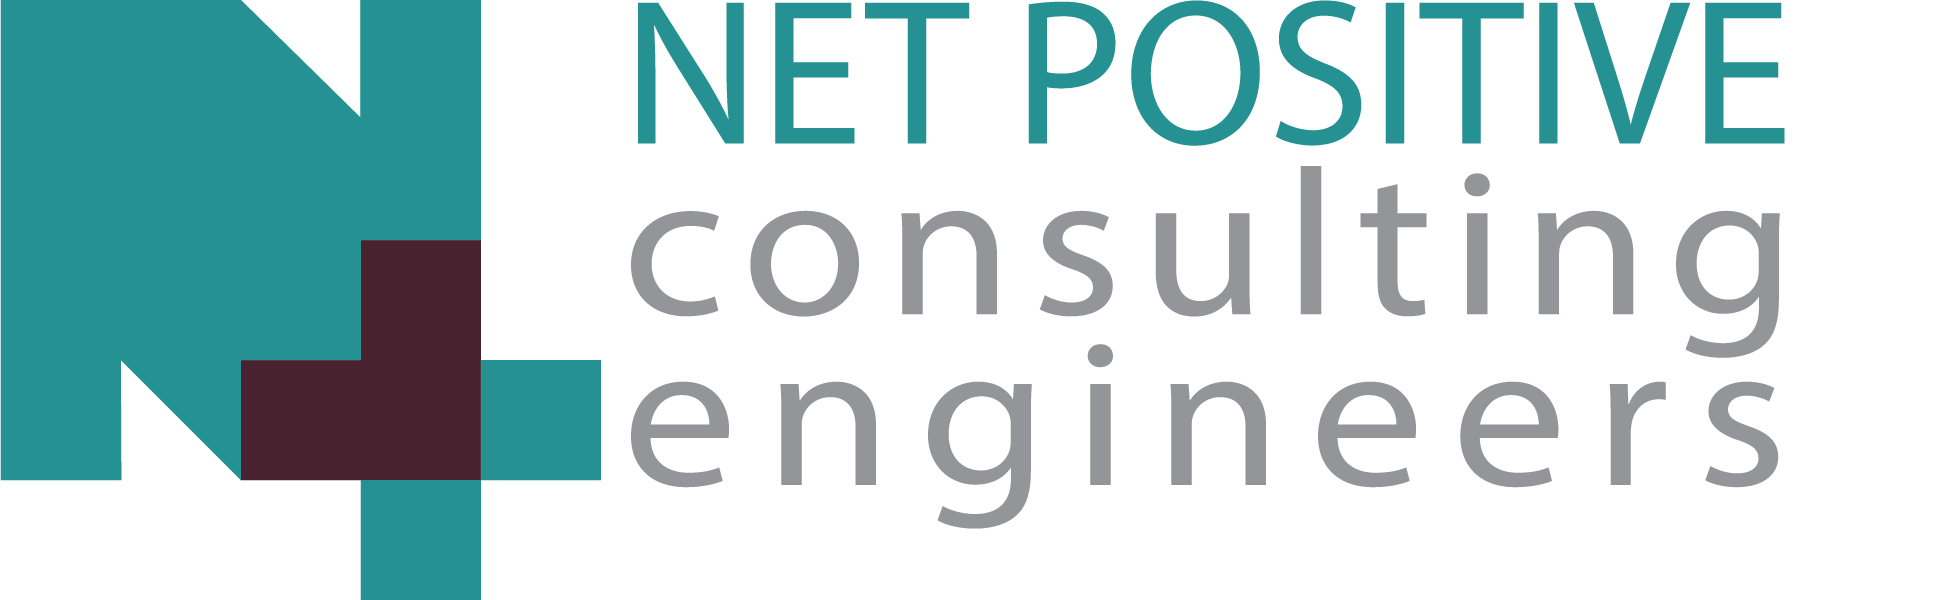 Net Positive logo 